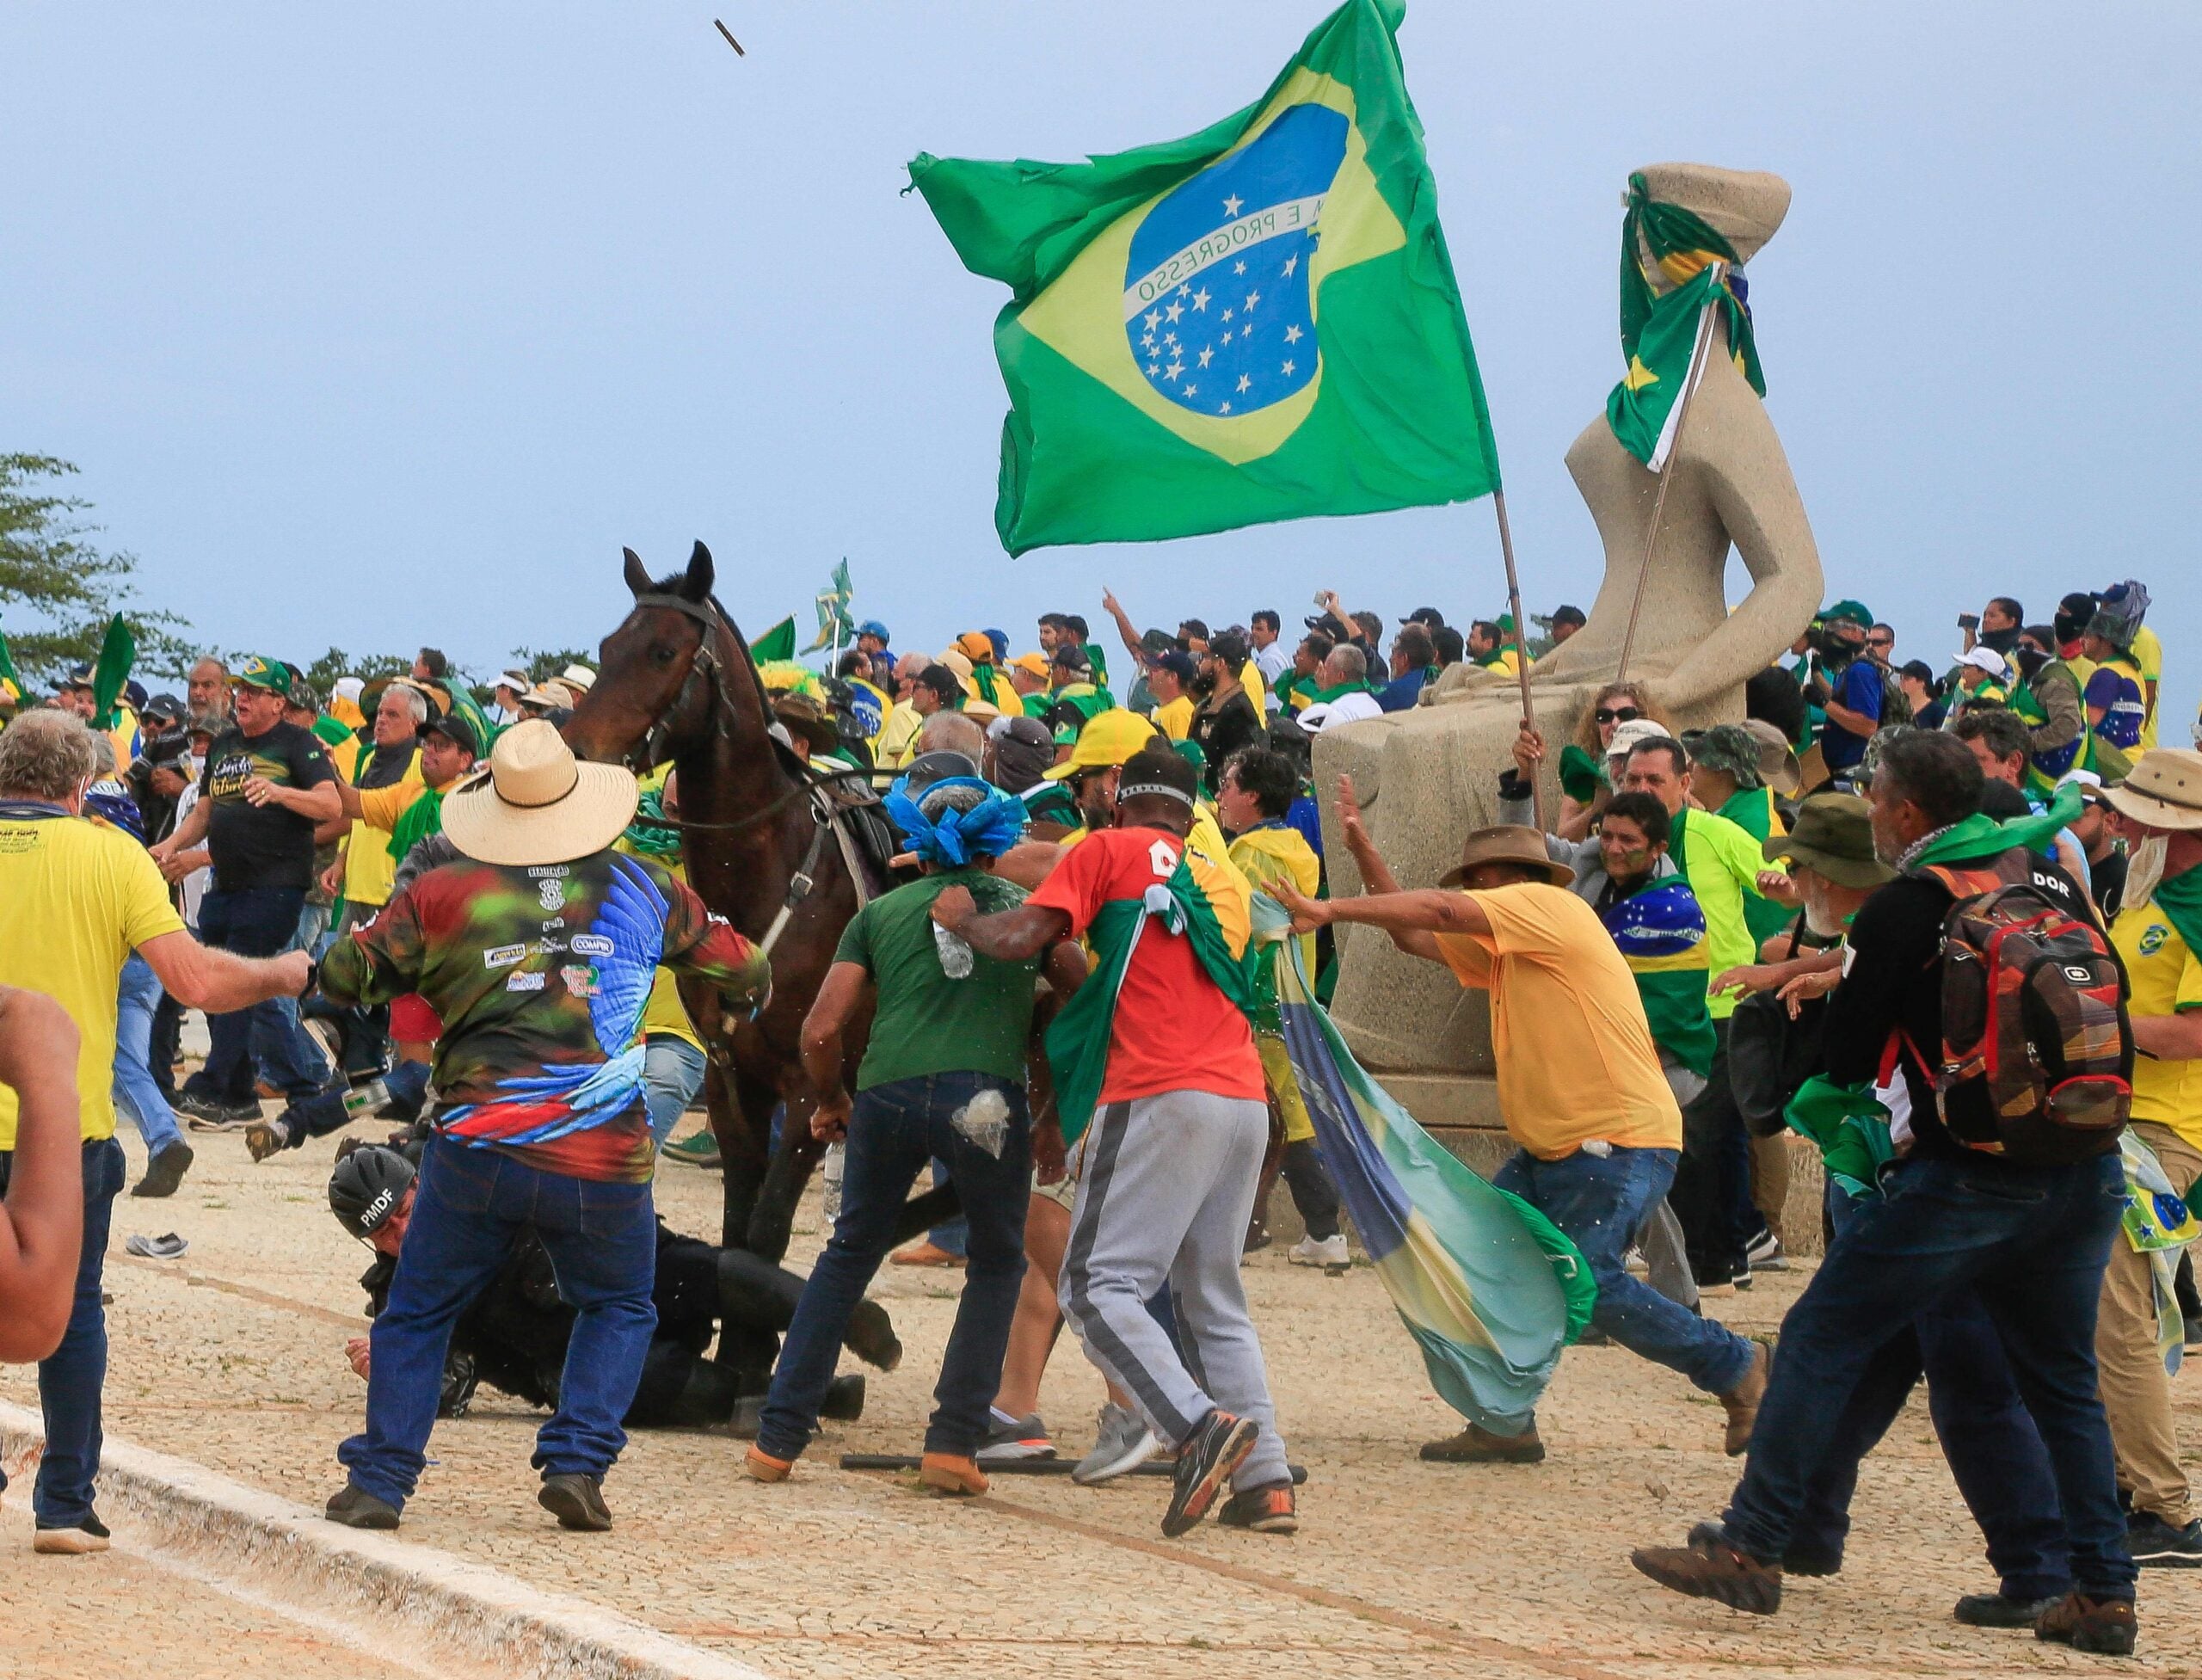 Soccer resumes in Brazil amid protests - The Boston Globe